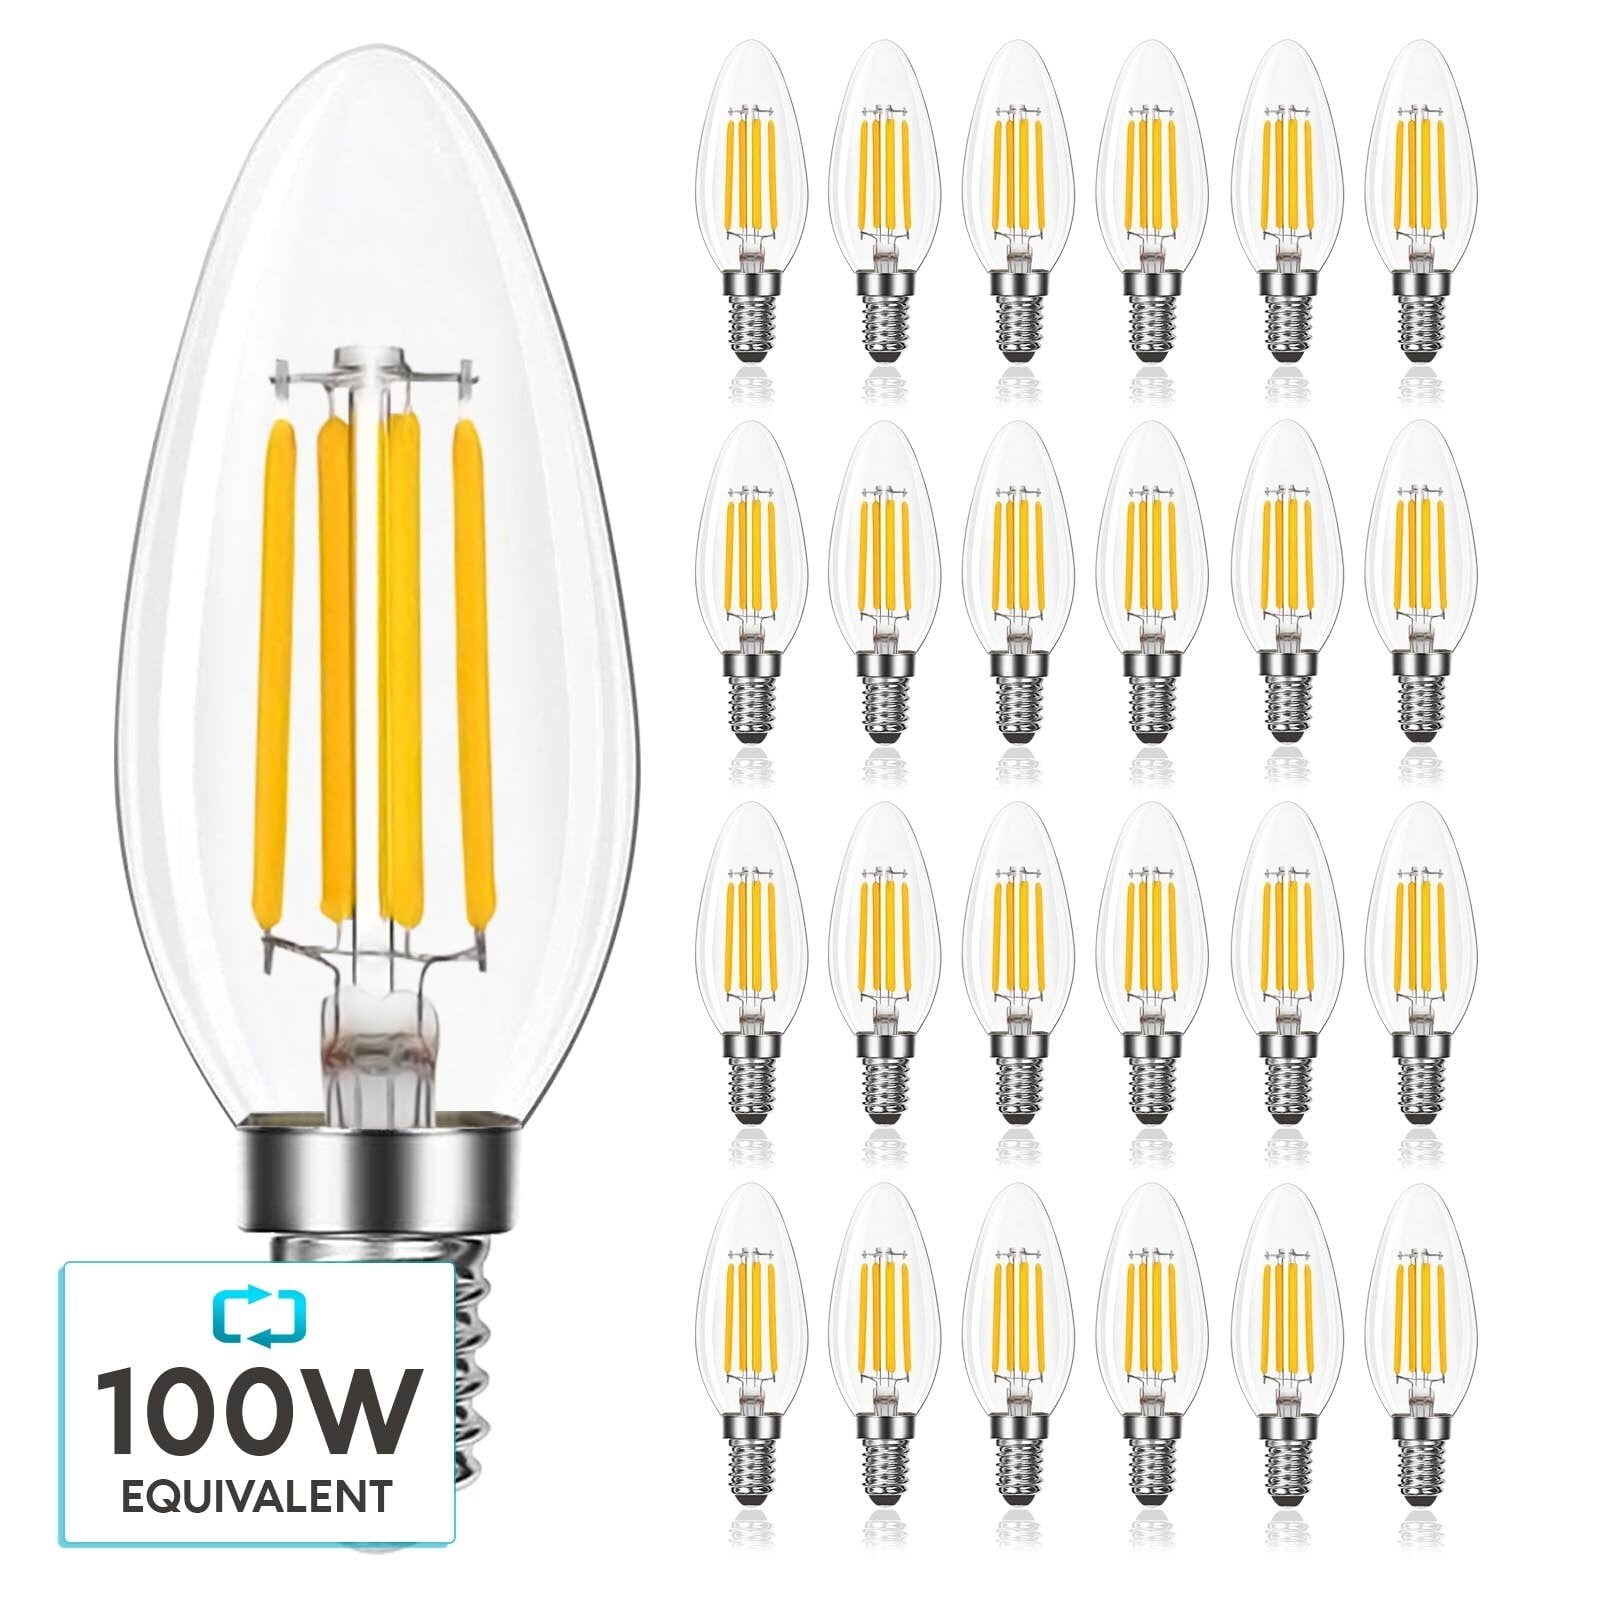 Luxrite Candelabra LED Light Bulbs 100W Equivalent 800 Lumens 7W